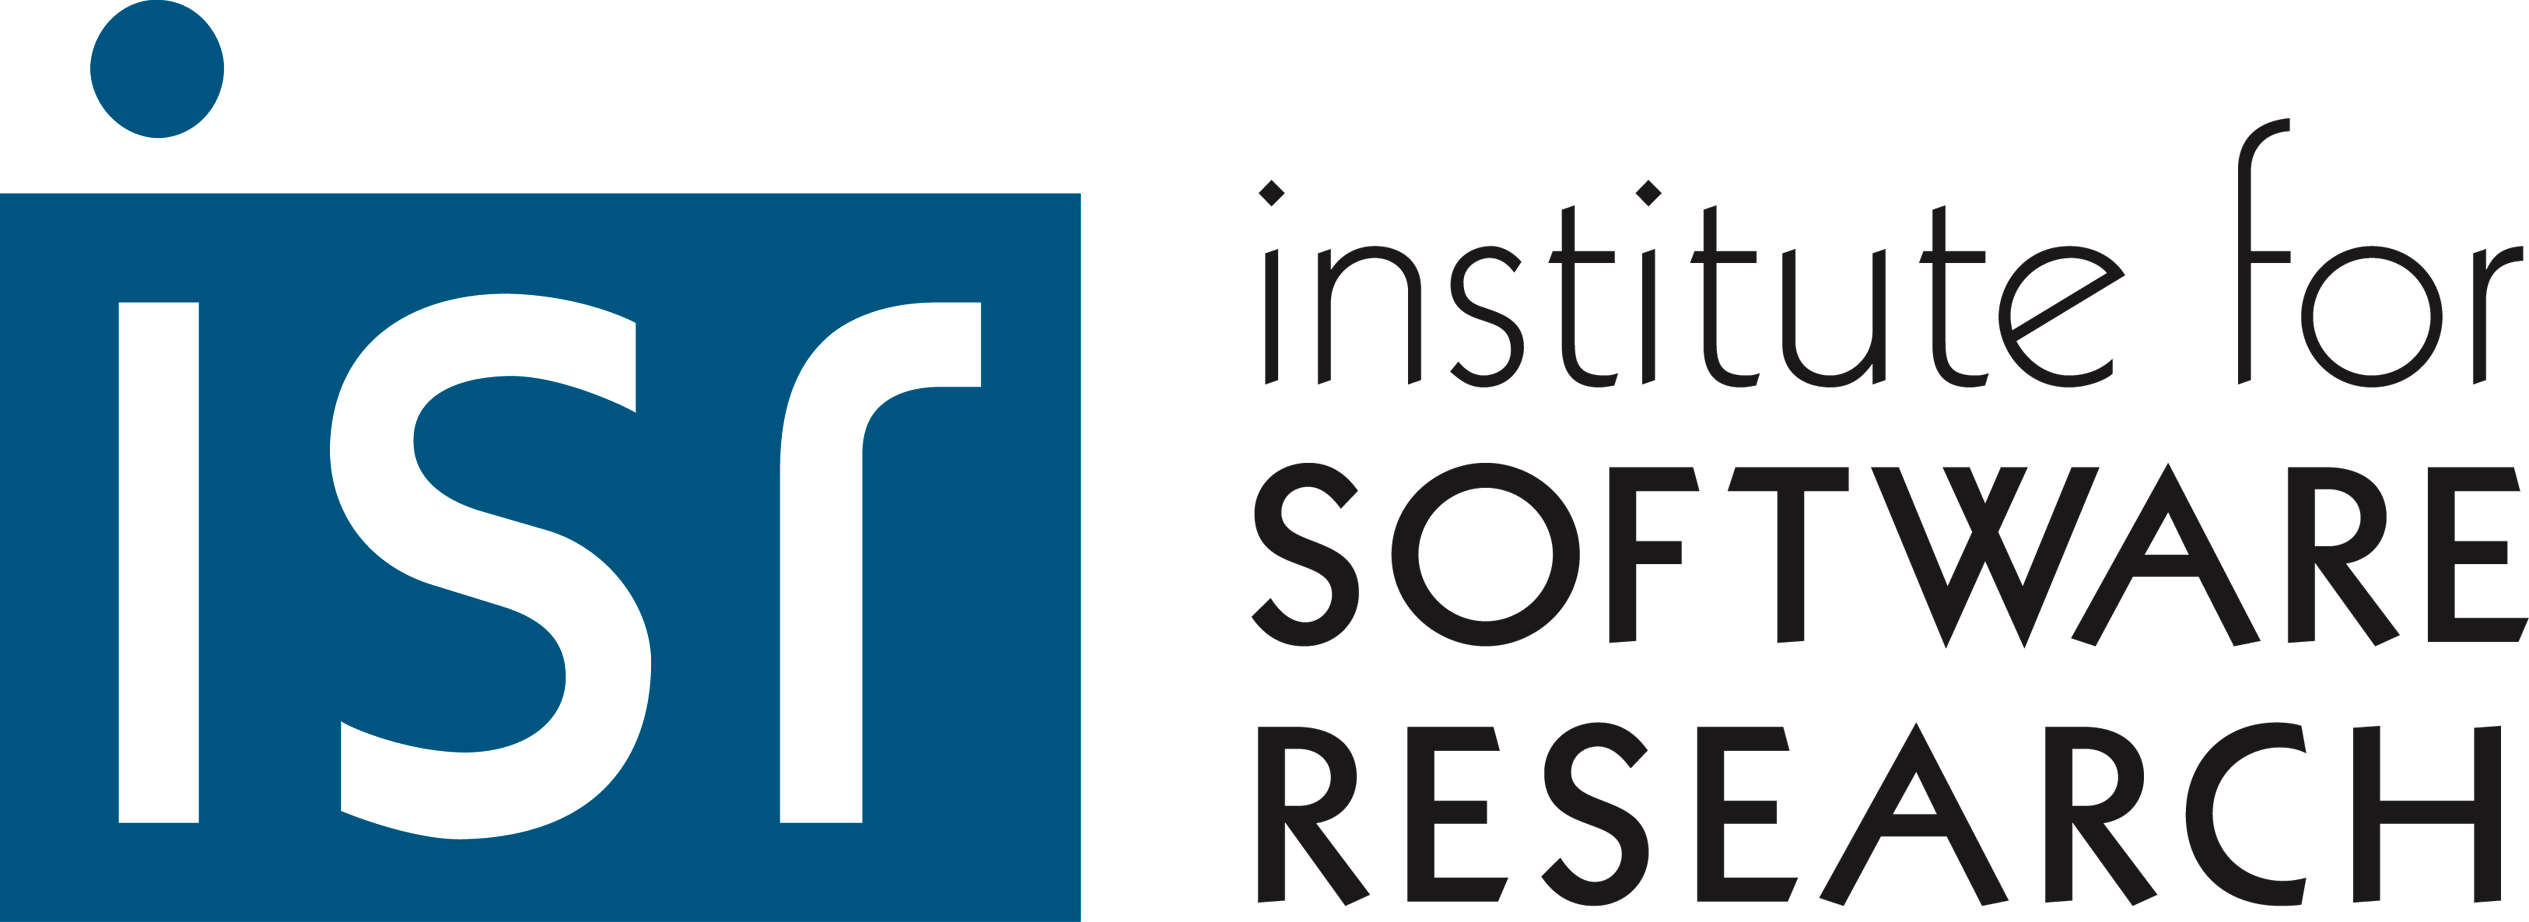 CMU Institute for Software Research